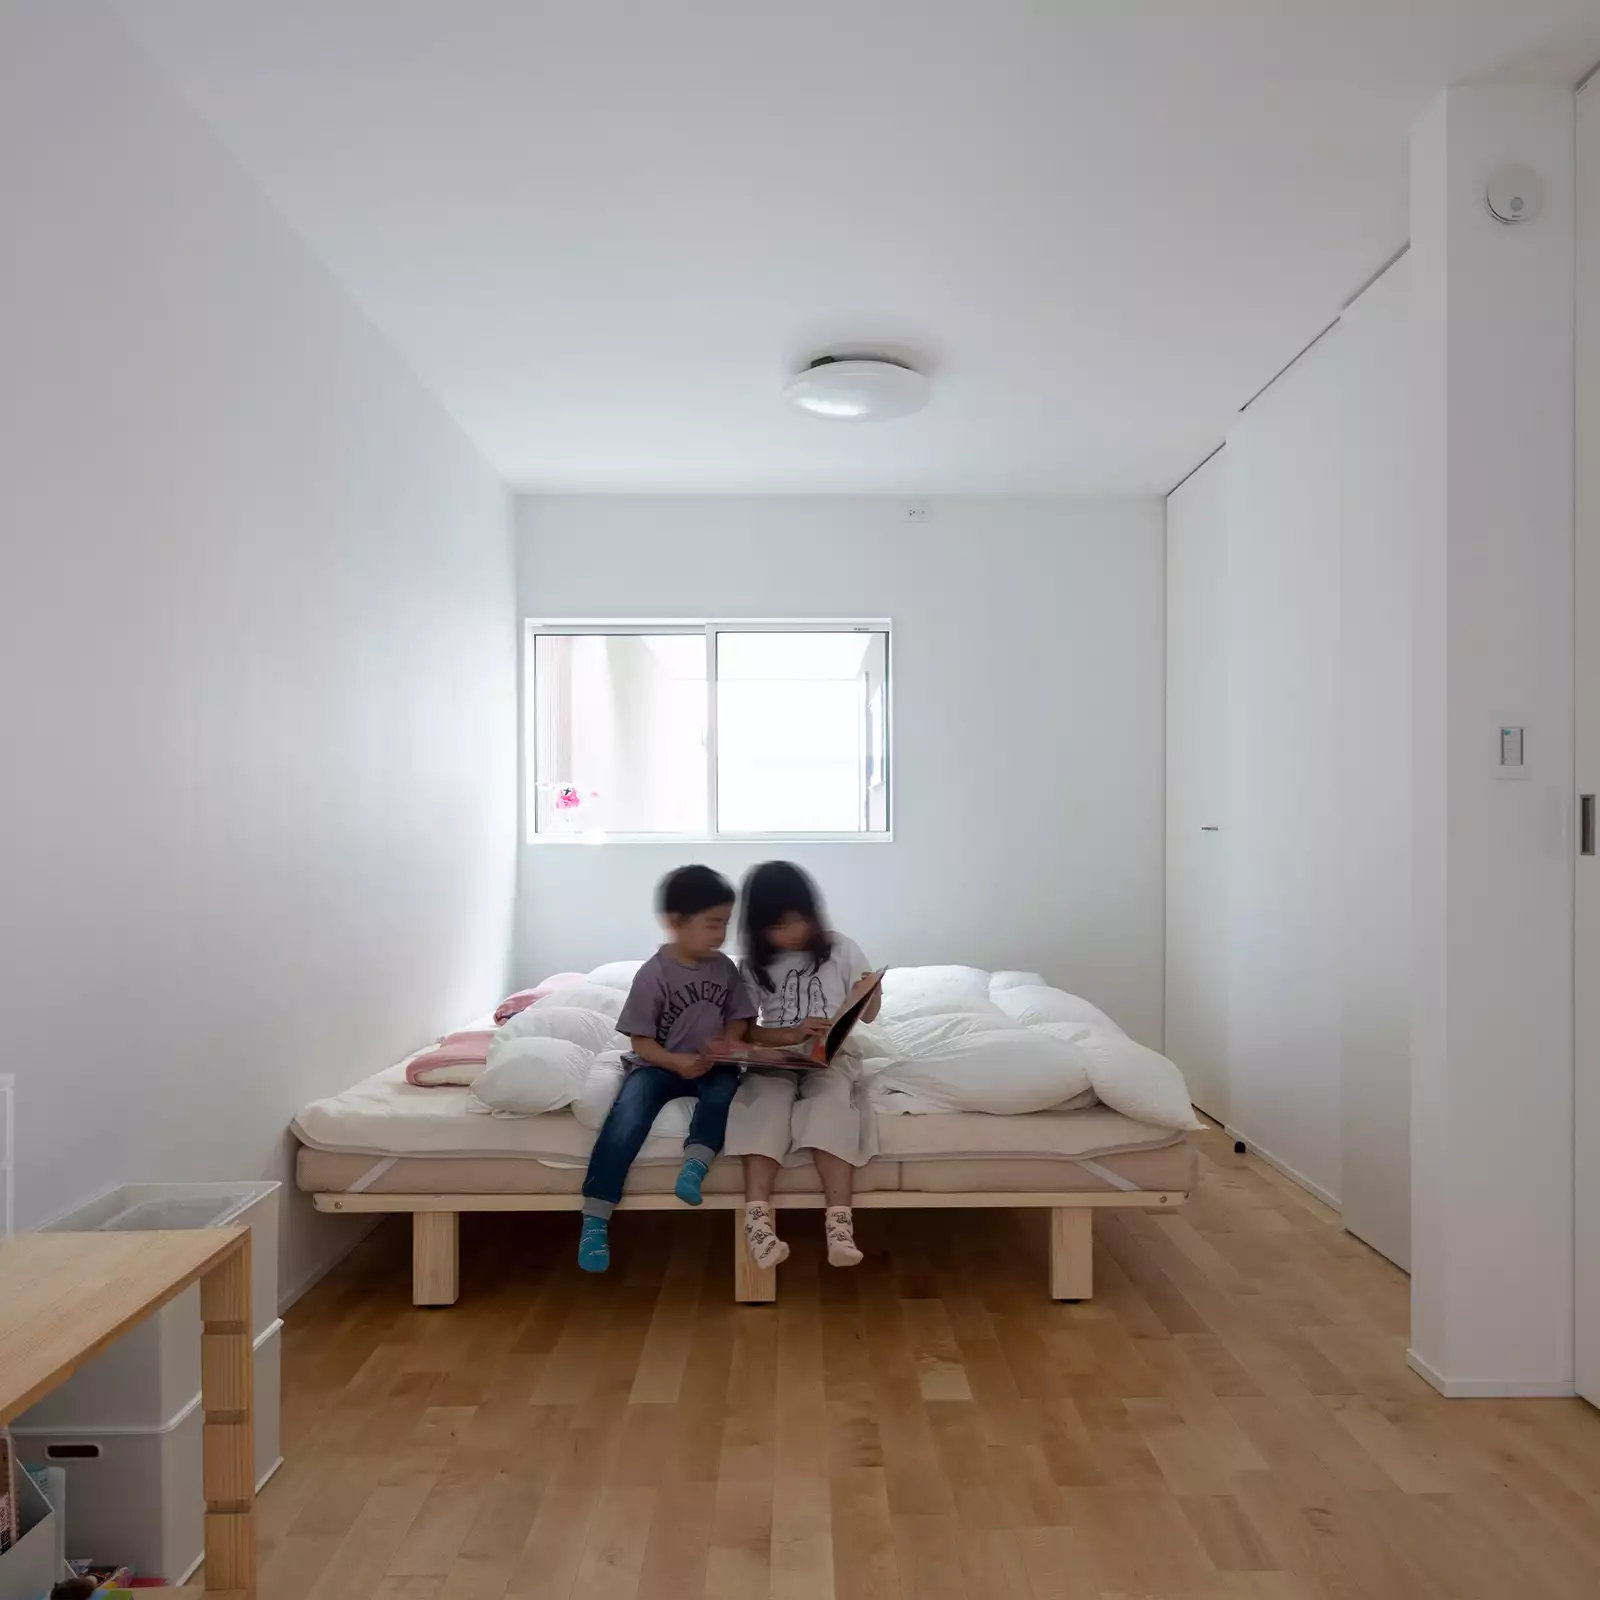 R+houseの物件の子ども室の写真。ほかの部屋と違い、床はバーチ材を使用。壁と天井は白で統一。